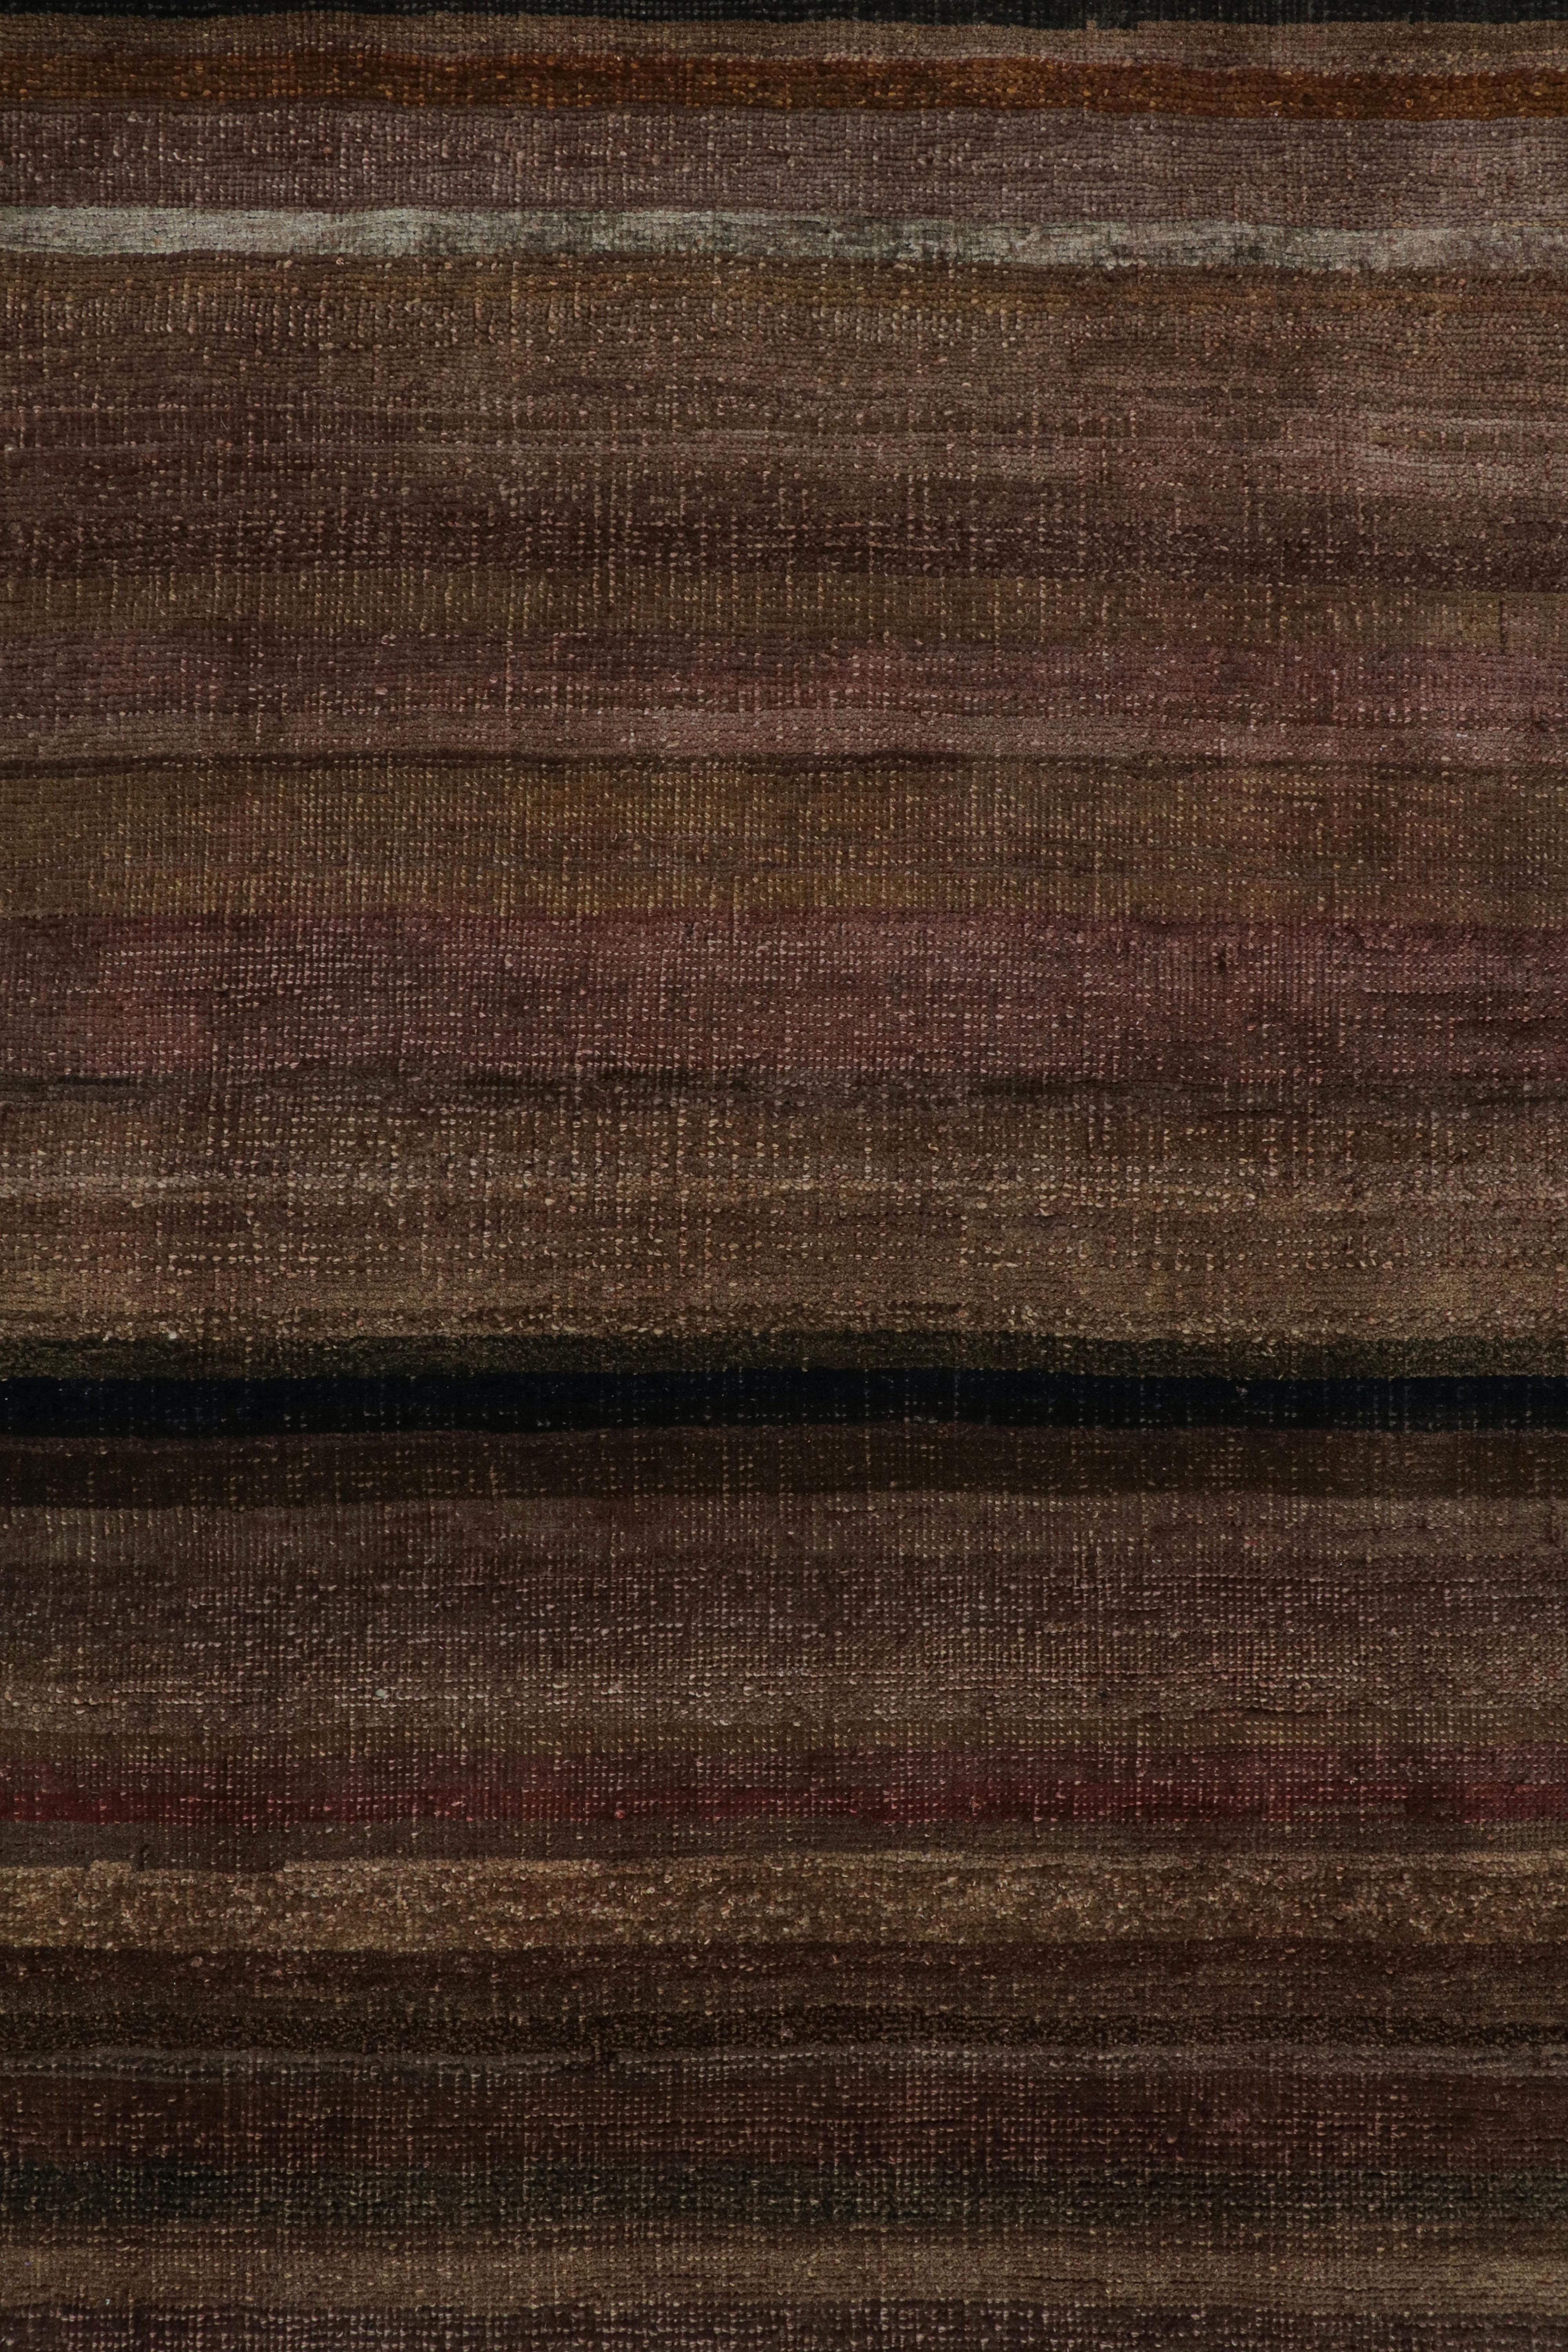 Indien Rug & Kilim's Modern Modern Textural Rug in Brown and Purple Stripes and Striae (Tapis à rayures et à bandes marron et violet) en vente